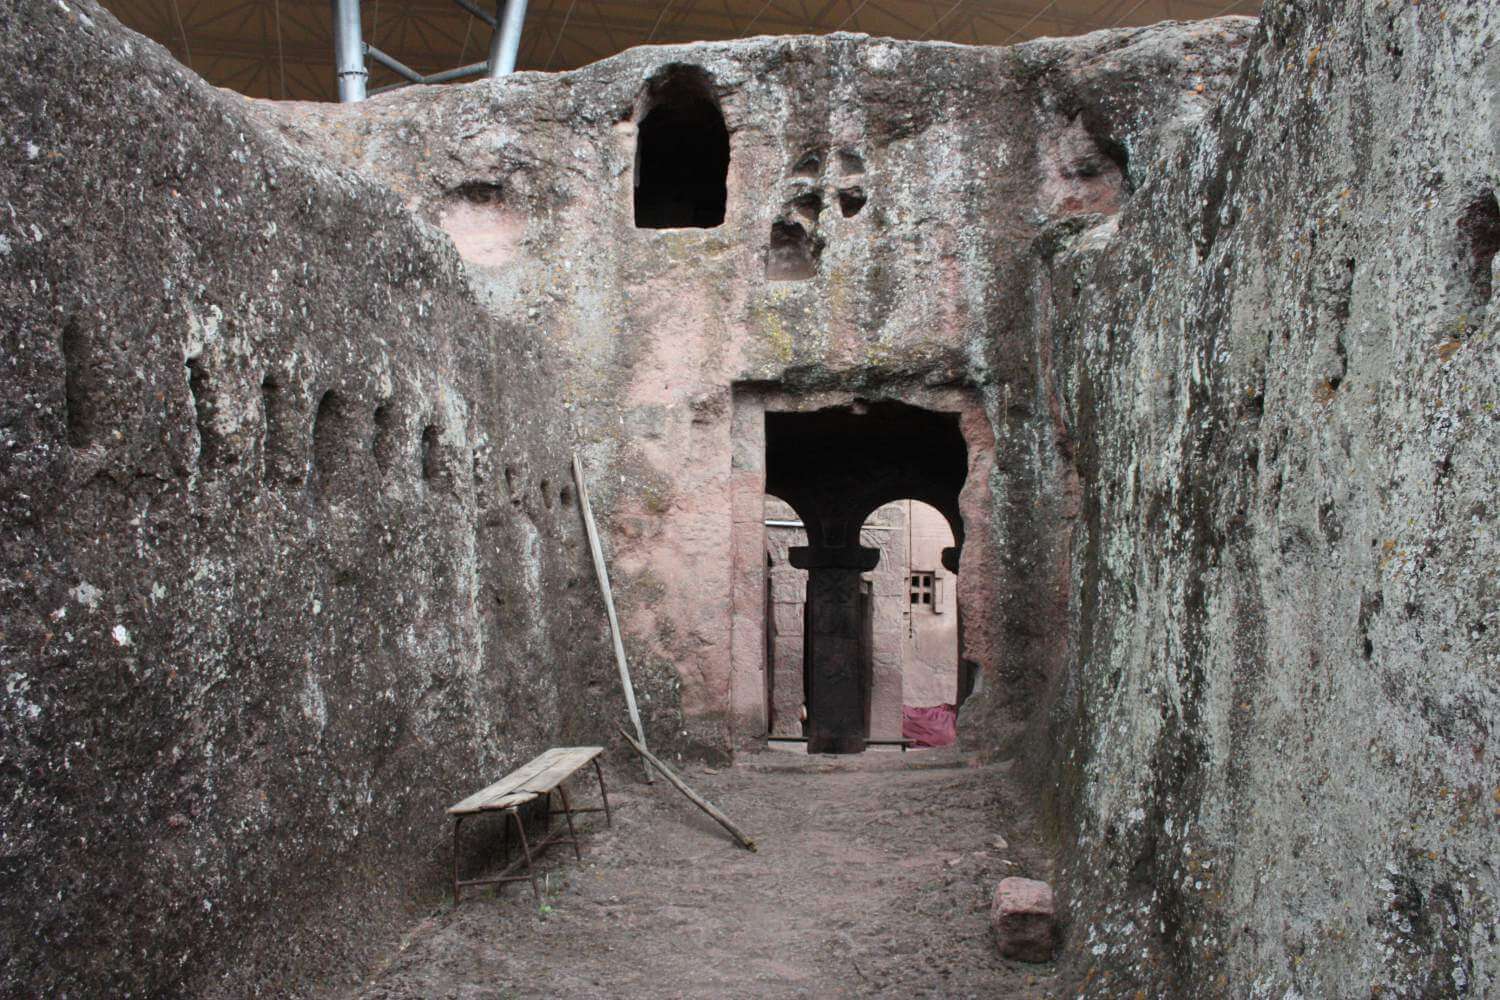 Lalibela - a subterranean labyrinth of passageways